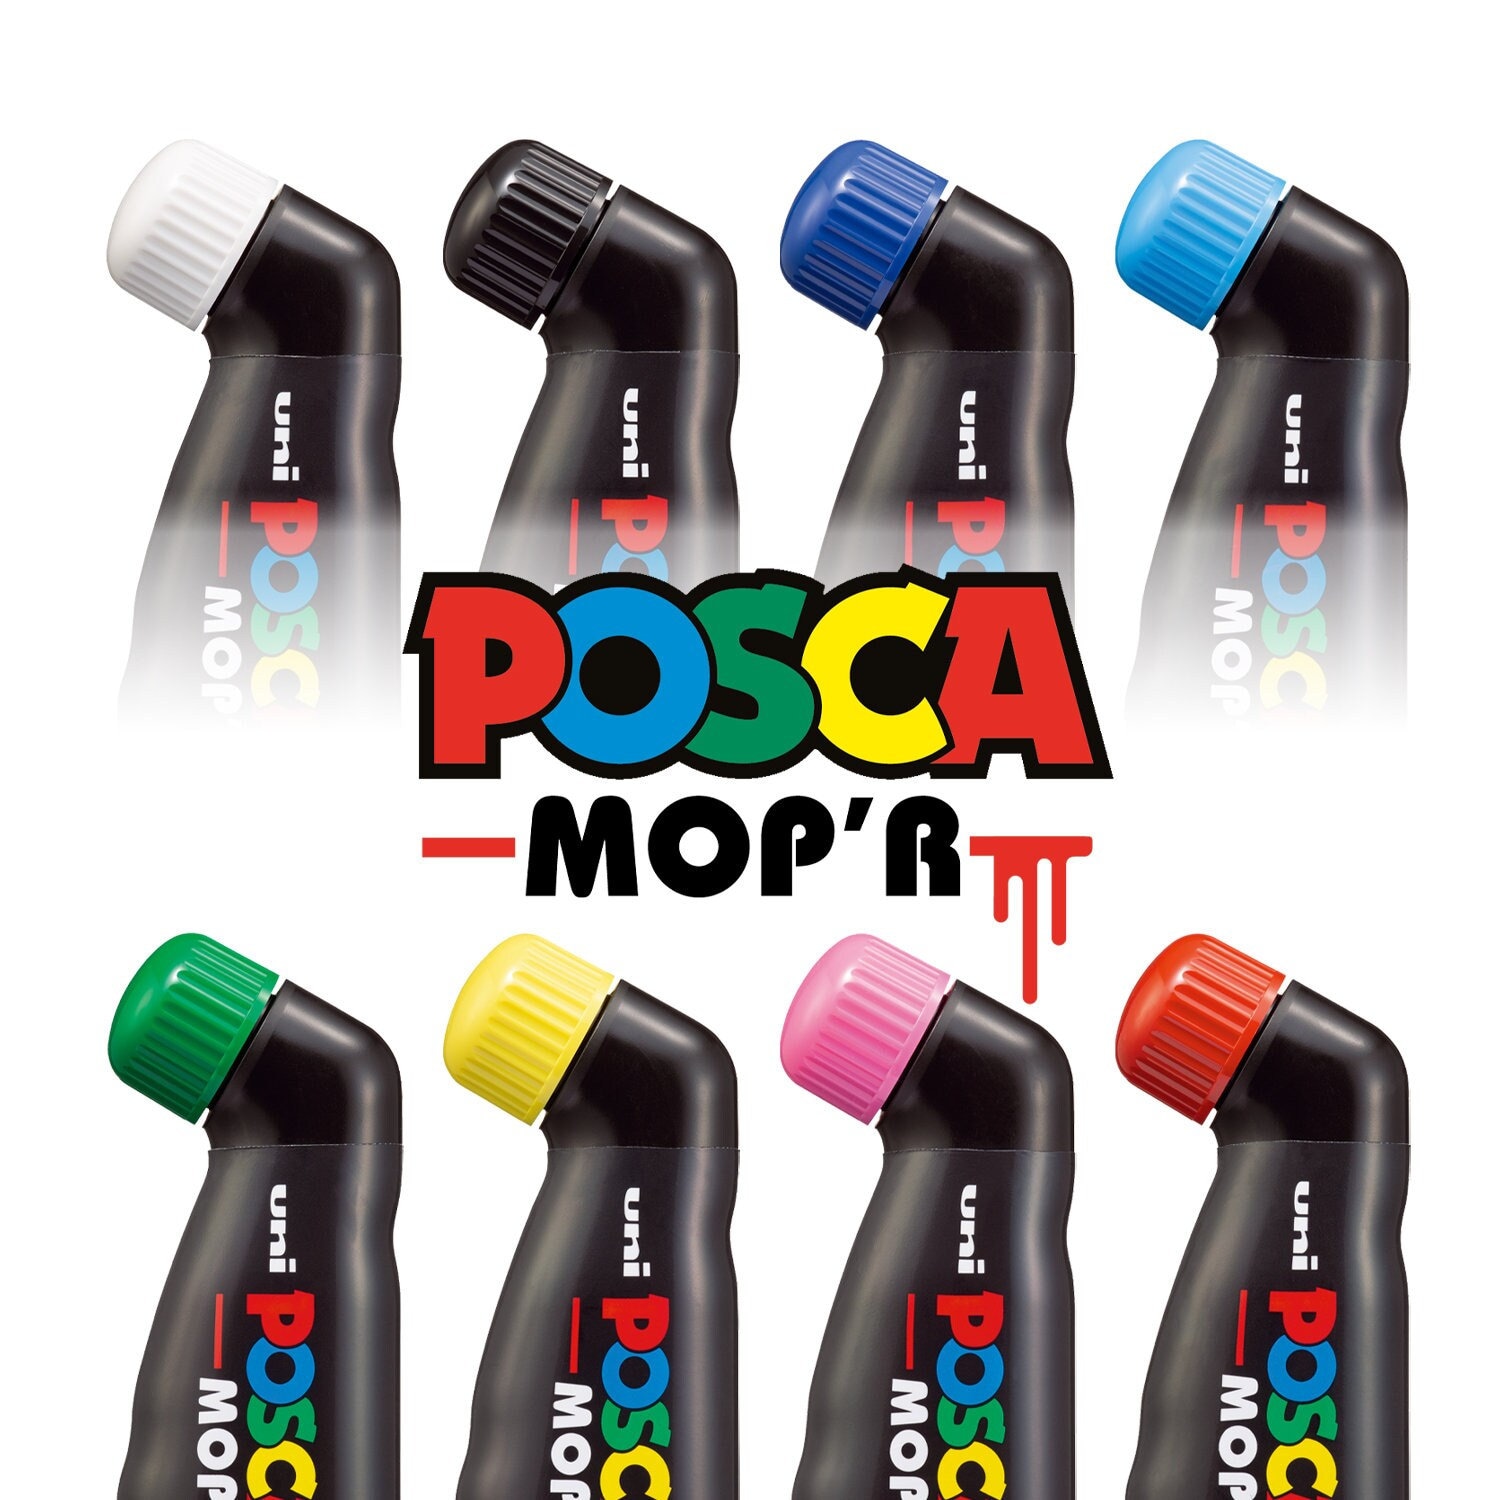 Posca Pas Cher - Paint Markers - The Best Posca Pas Cher - AliExpress